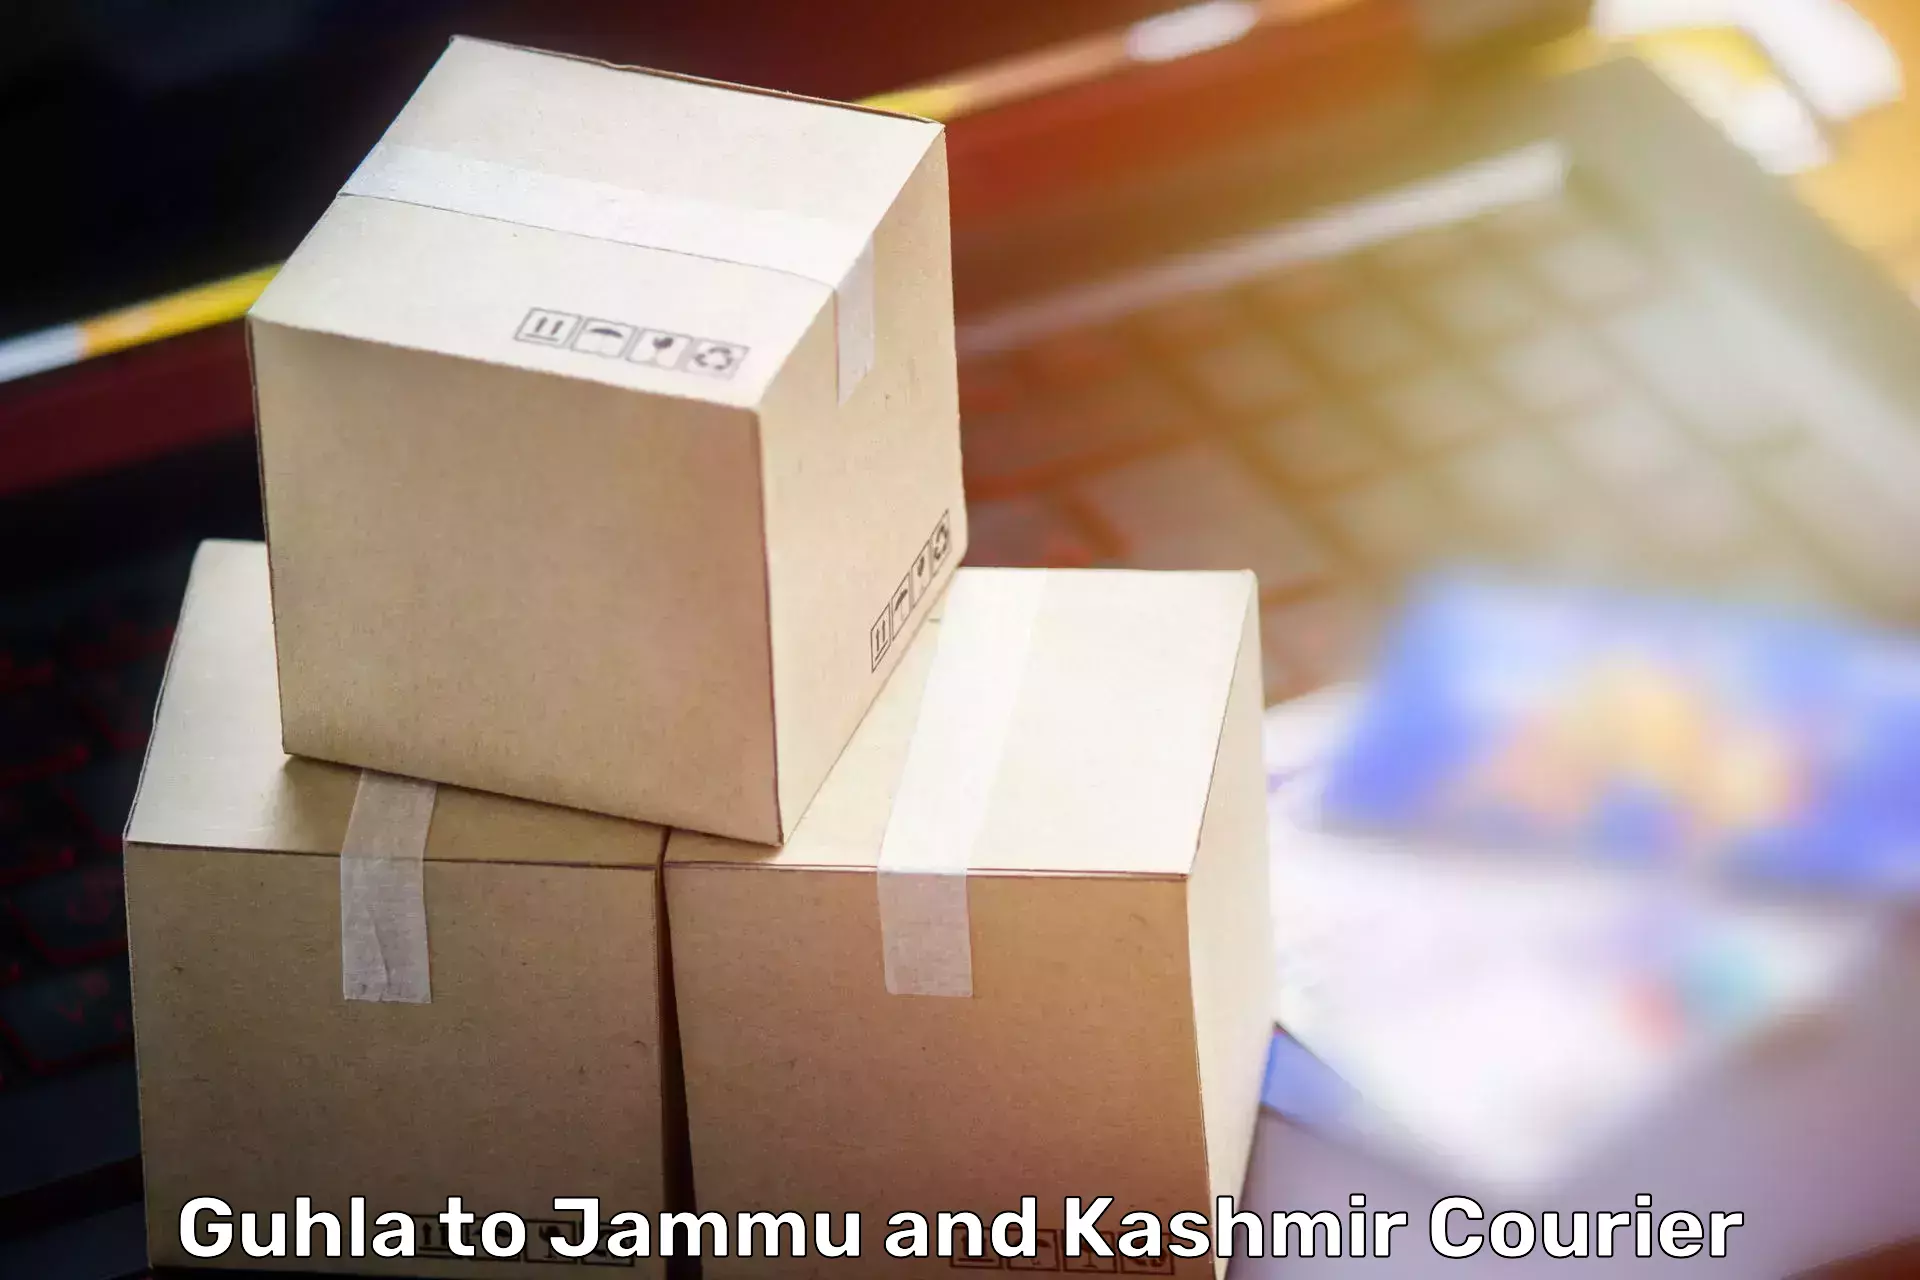 Furniture moving specialists Guhla to University of Jammu